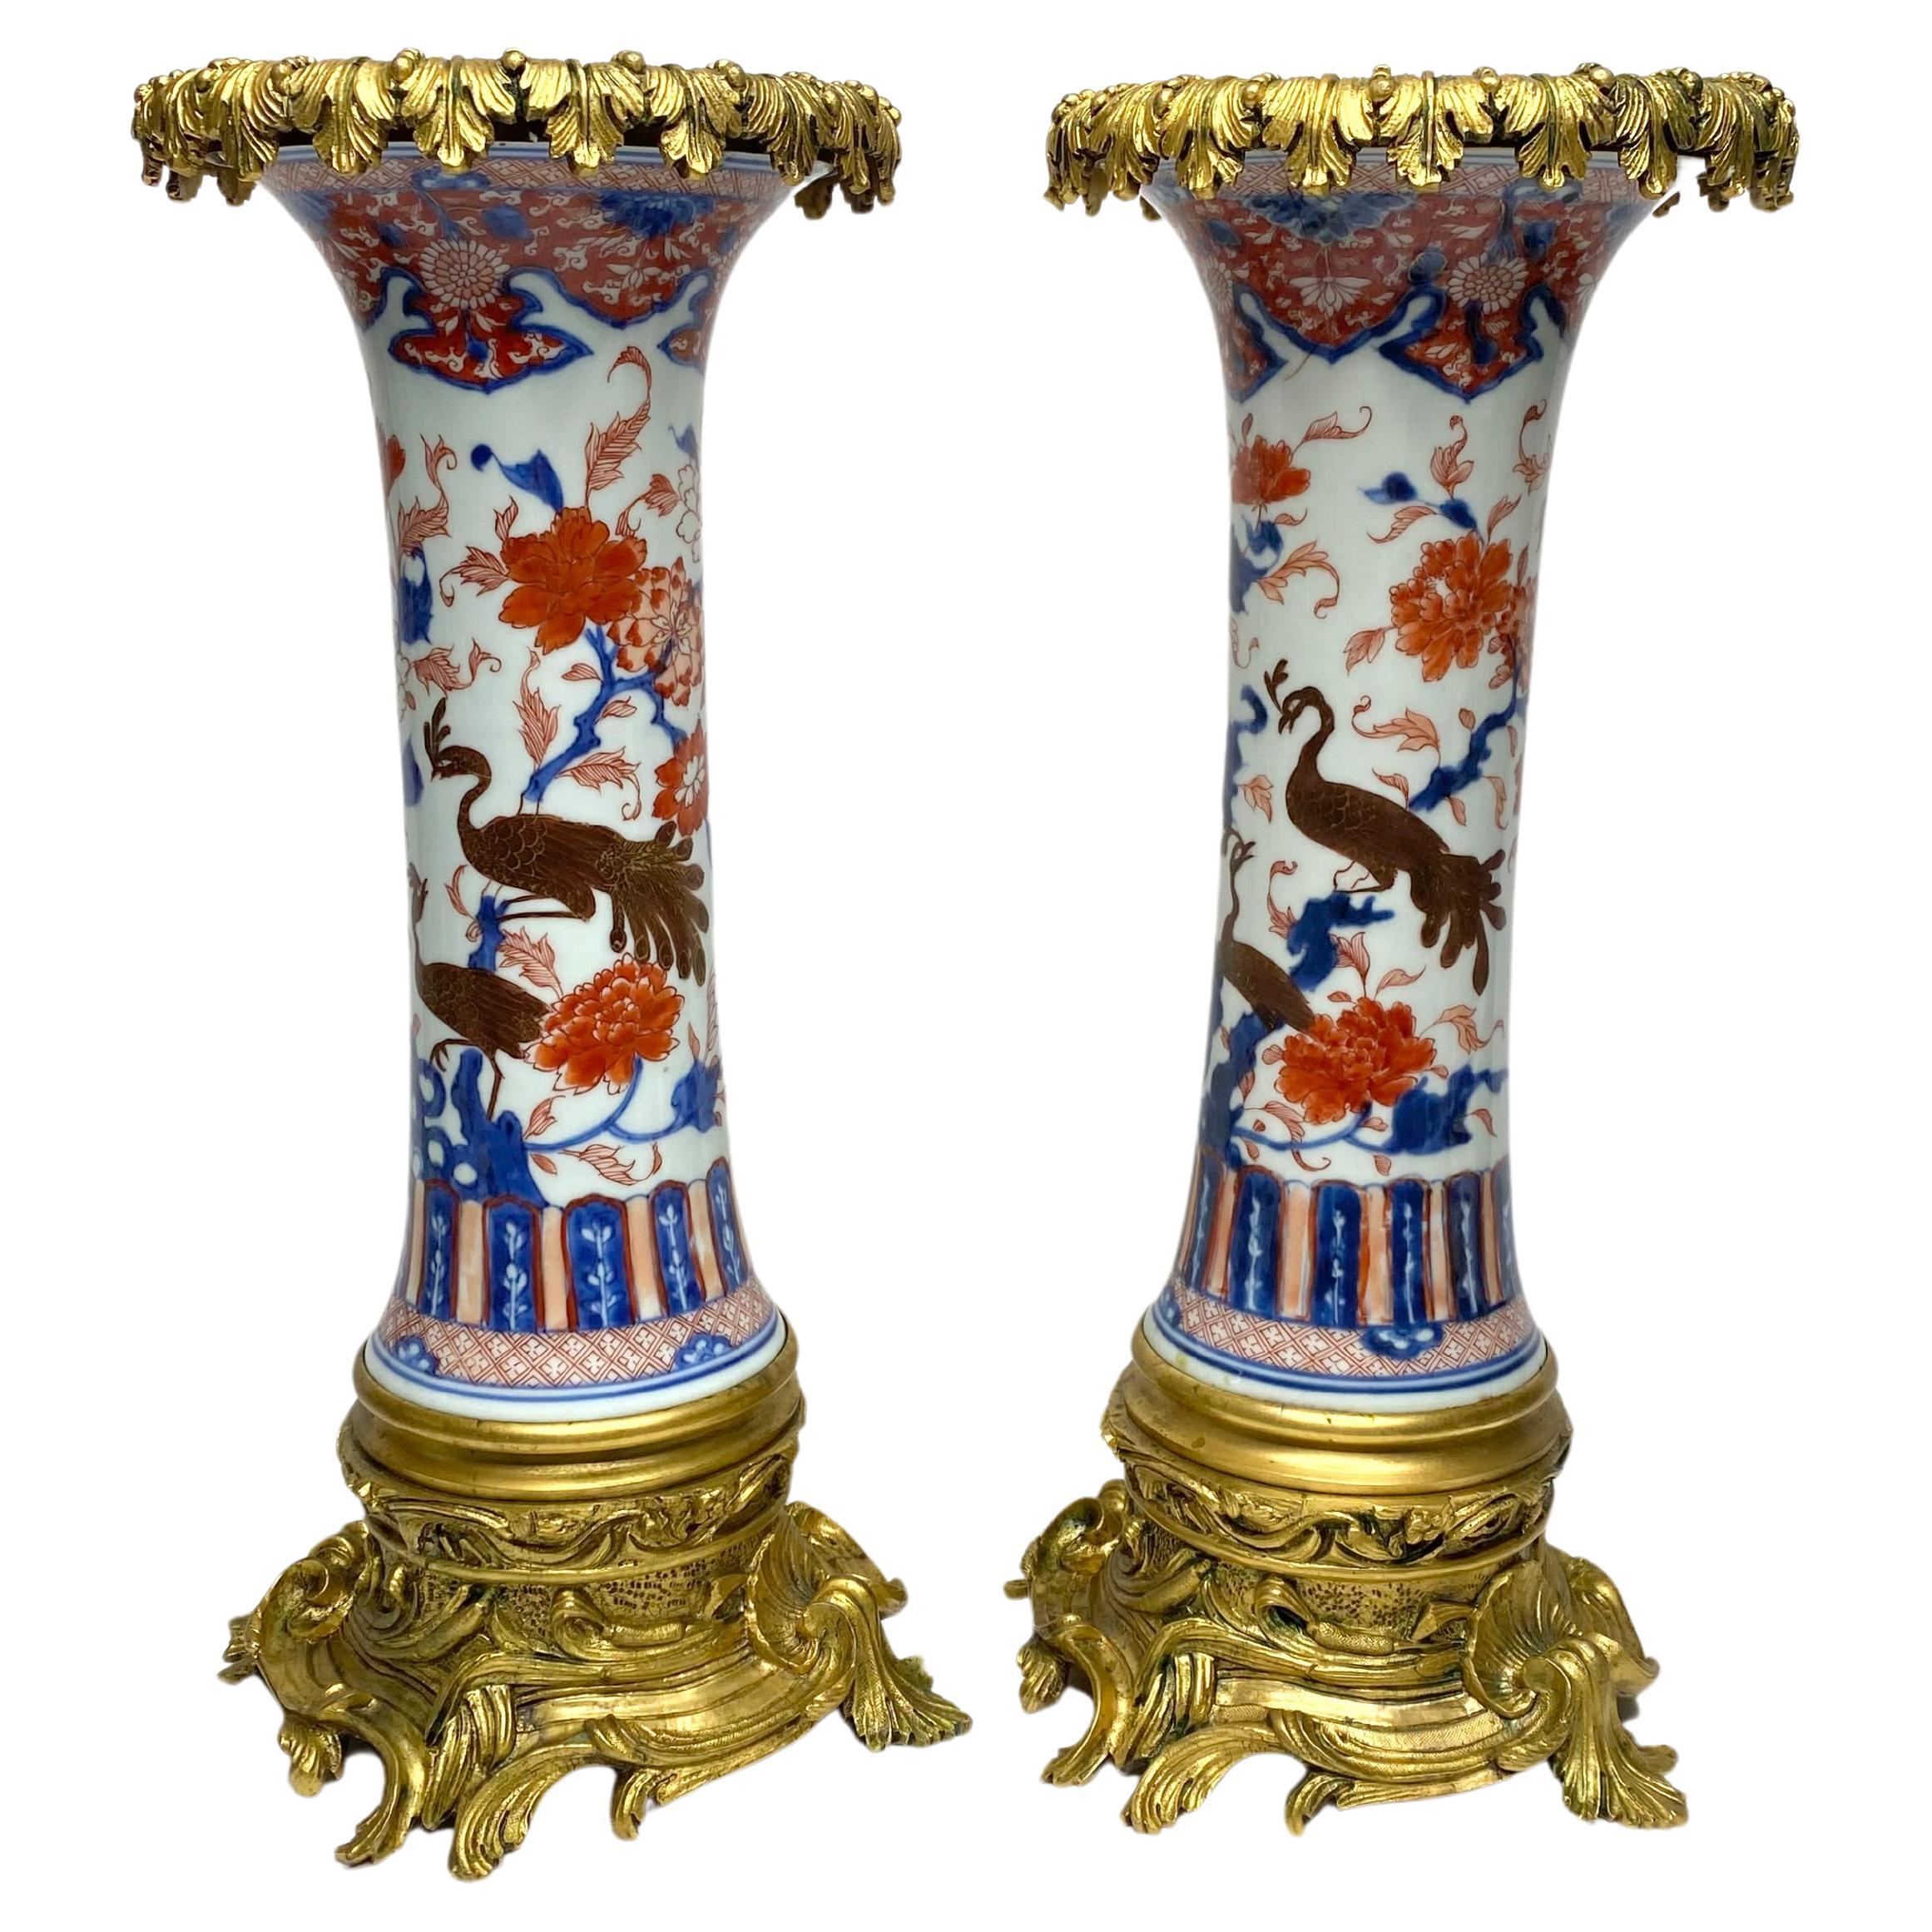 Pair Chinese Imari porcelain and ormolu vases, c. 1700. Kangxi Period.